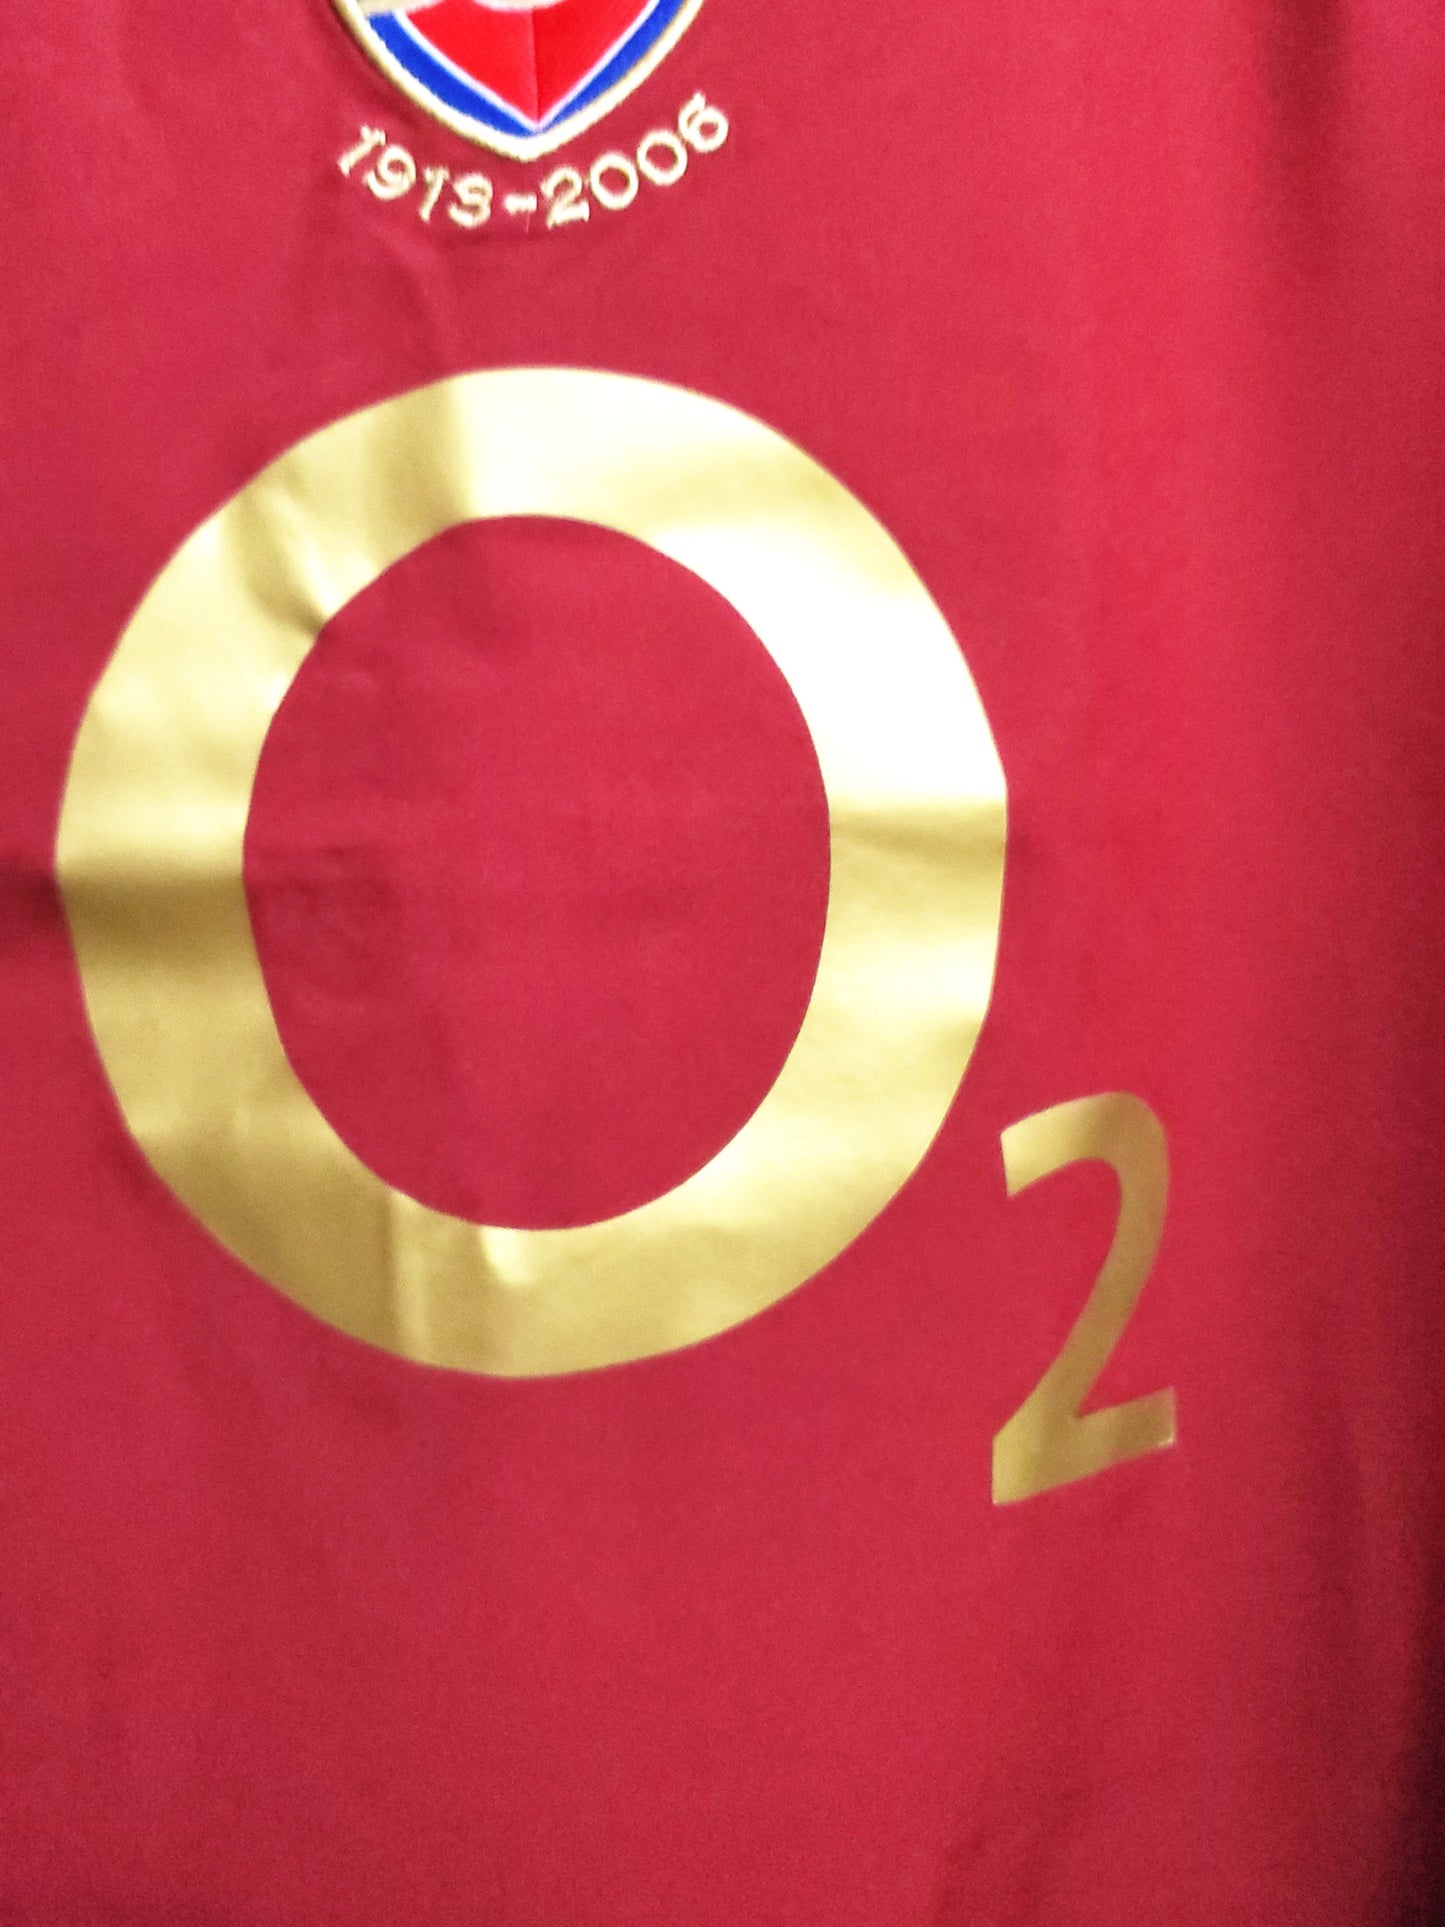 Retro Arsenal 05/06 Home Shirt Kit